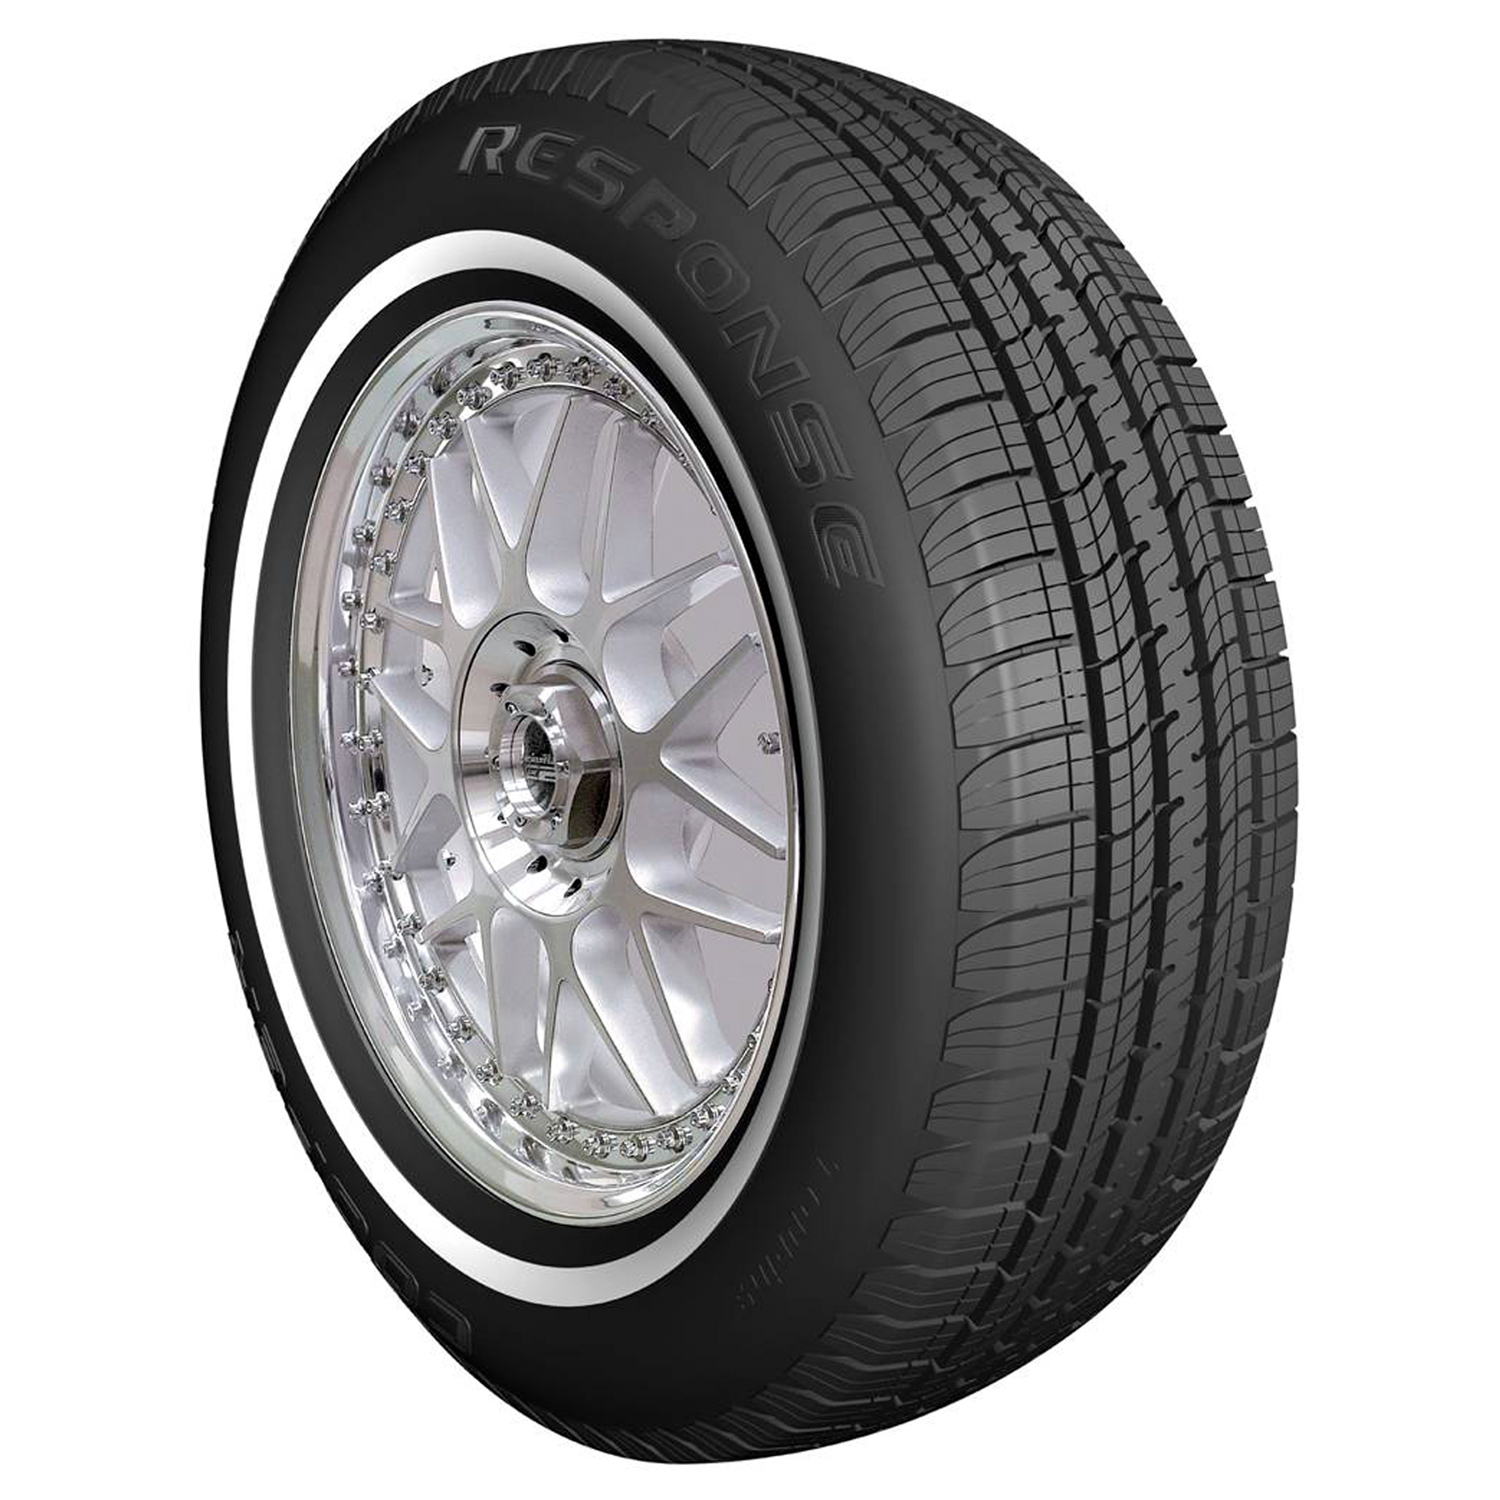 21570r14 tires